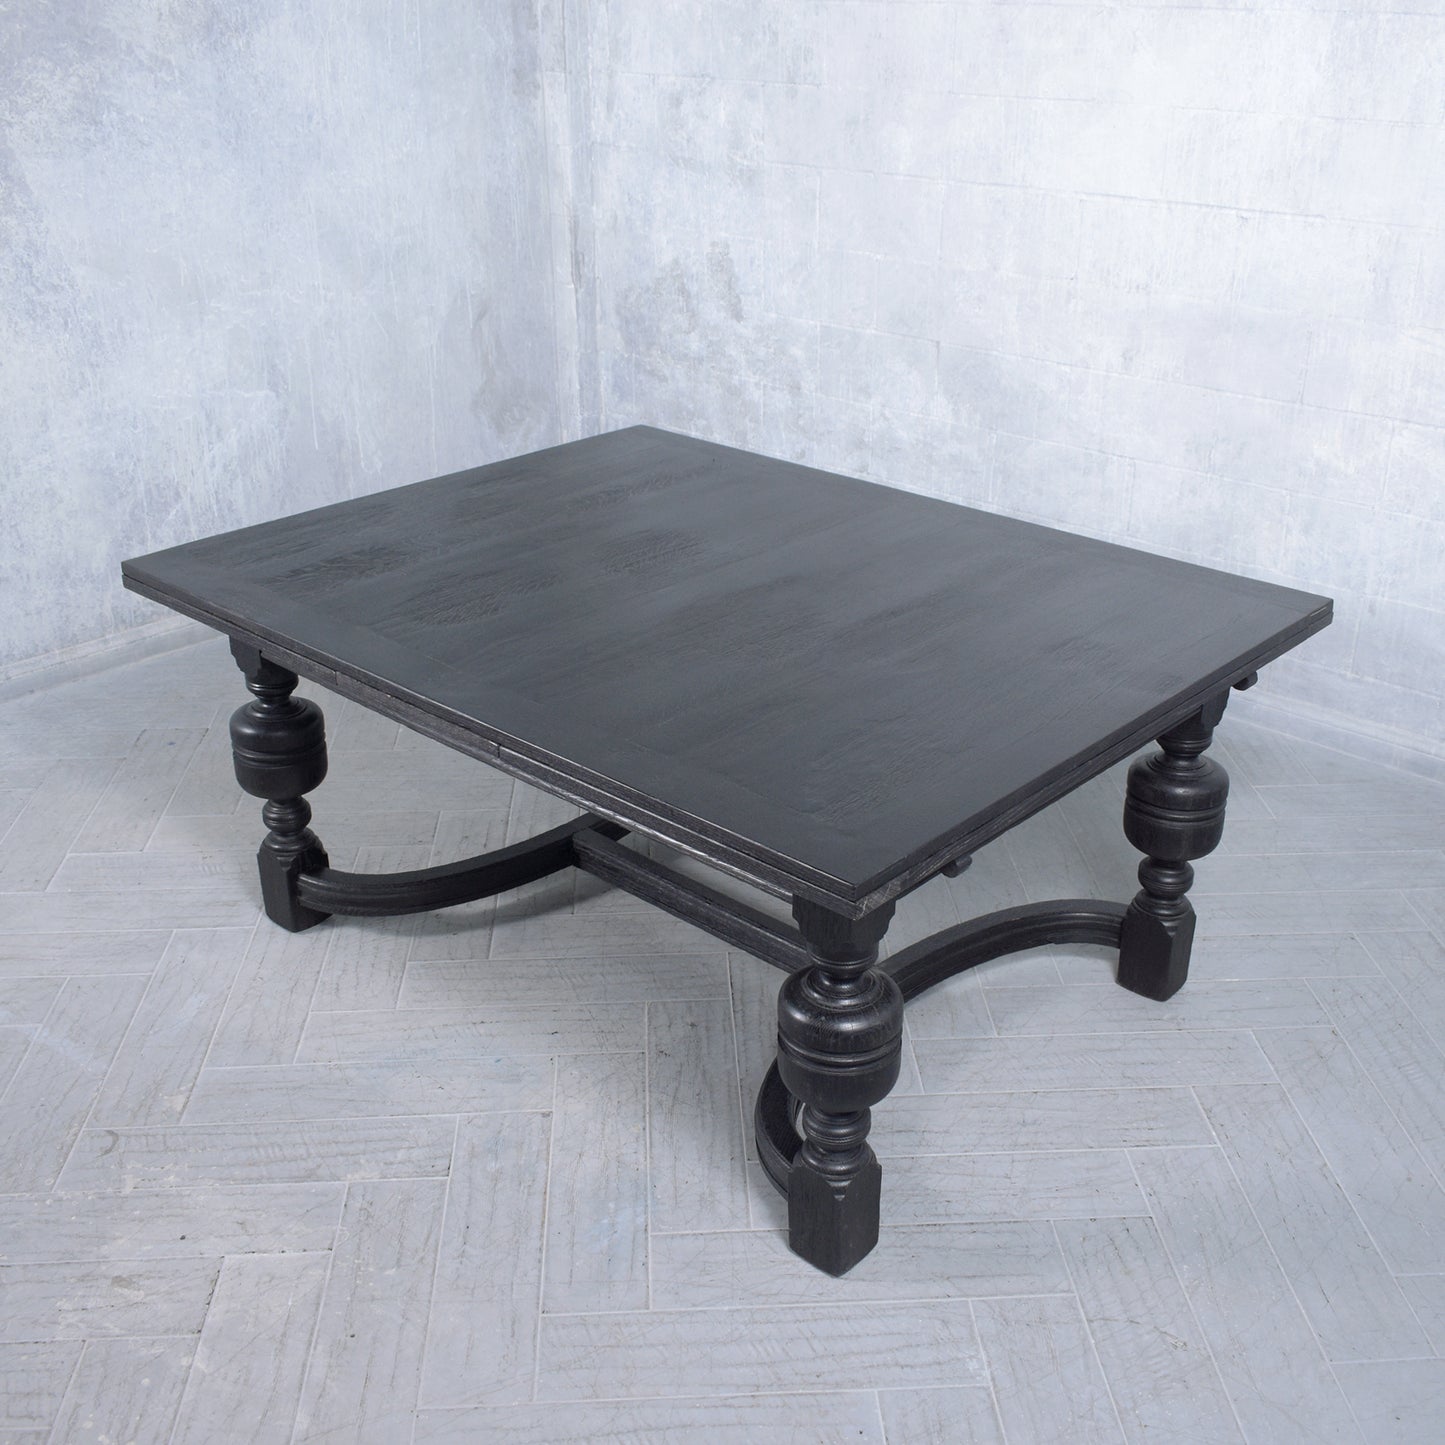 Spanish Colonial Ebonized Extendable Table